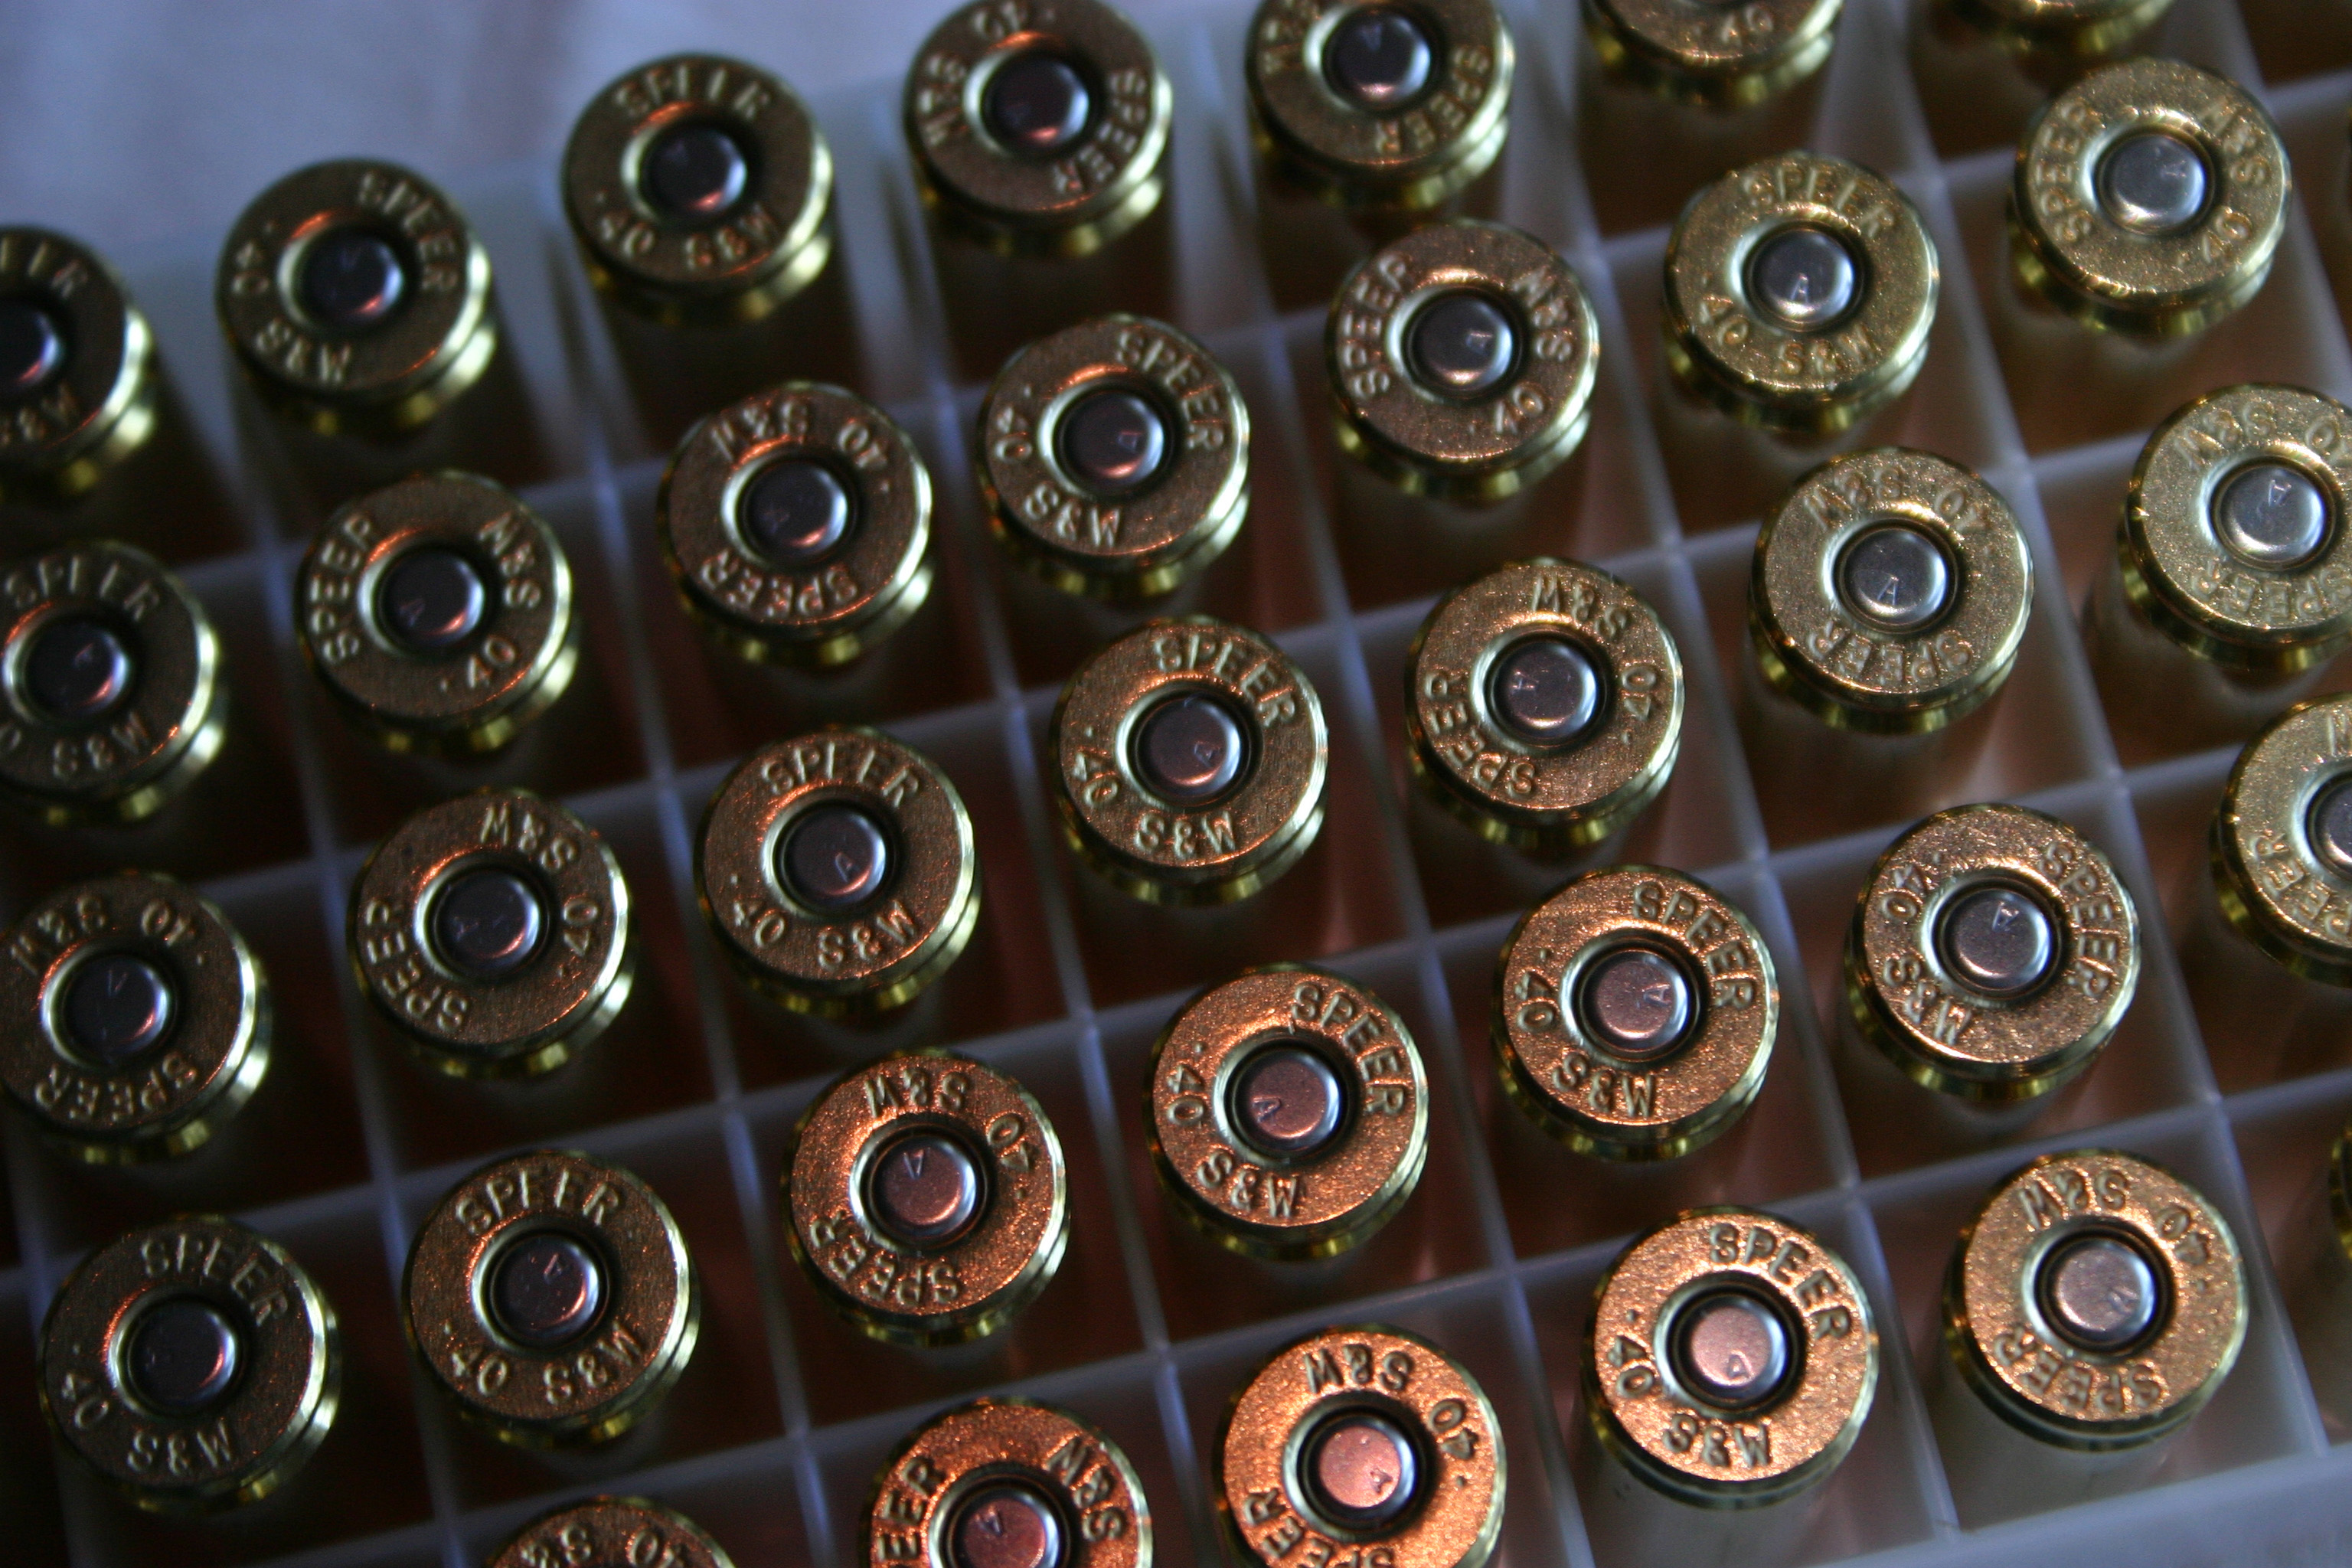 ammo stockpile law